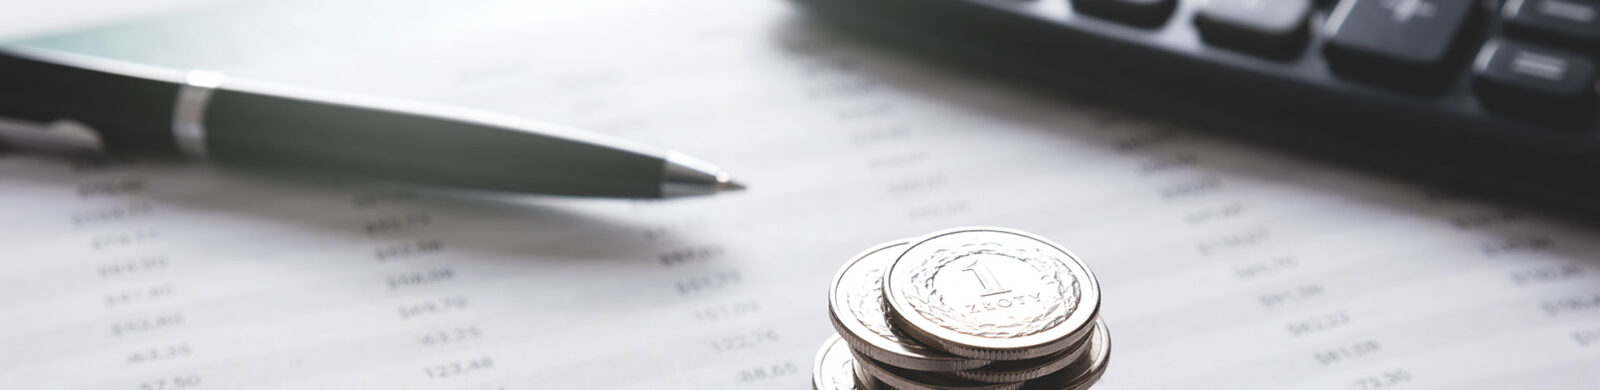 a pen, a calculator, a stack of coins on a financial sheet